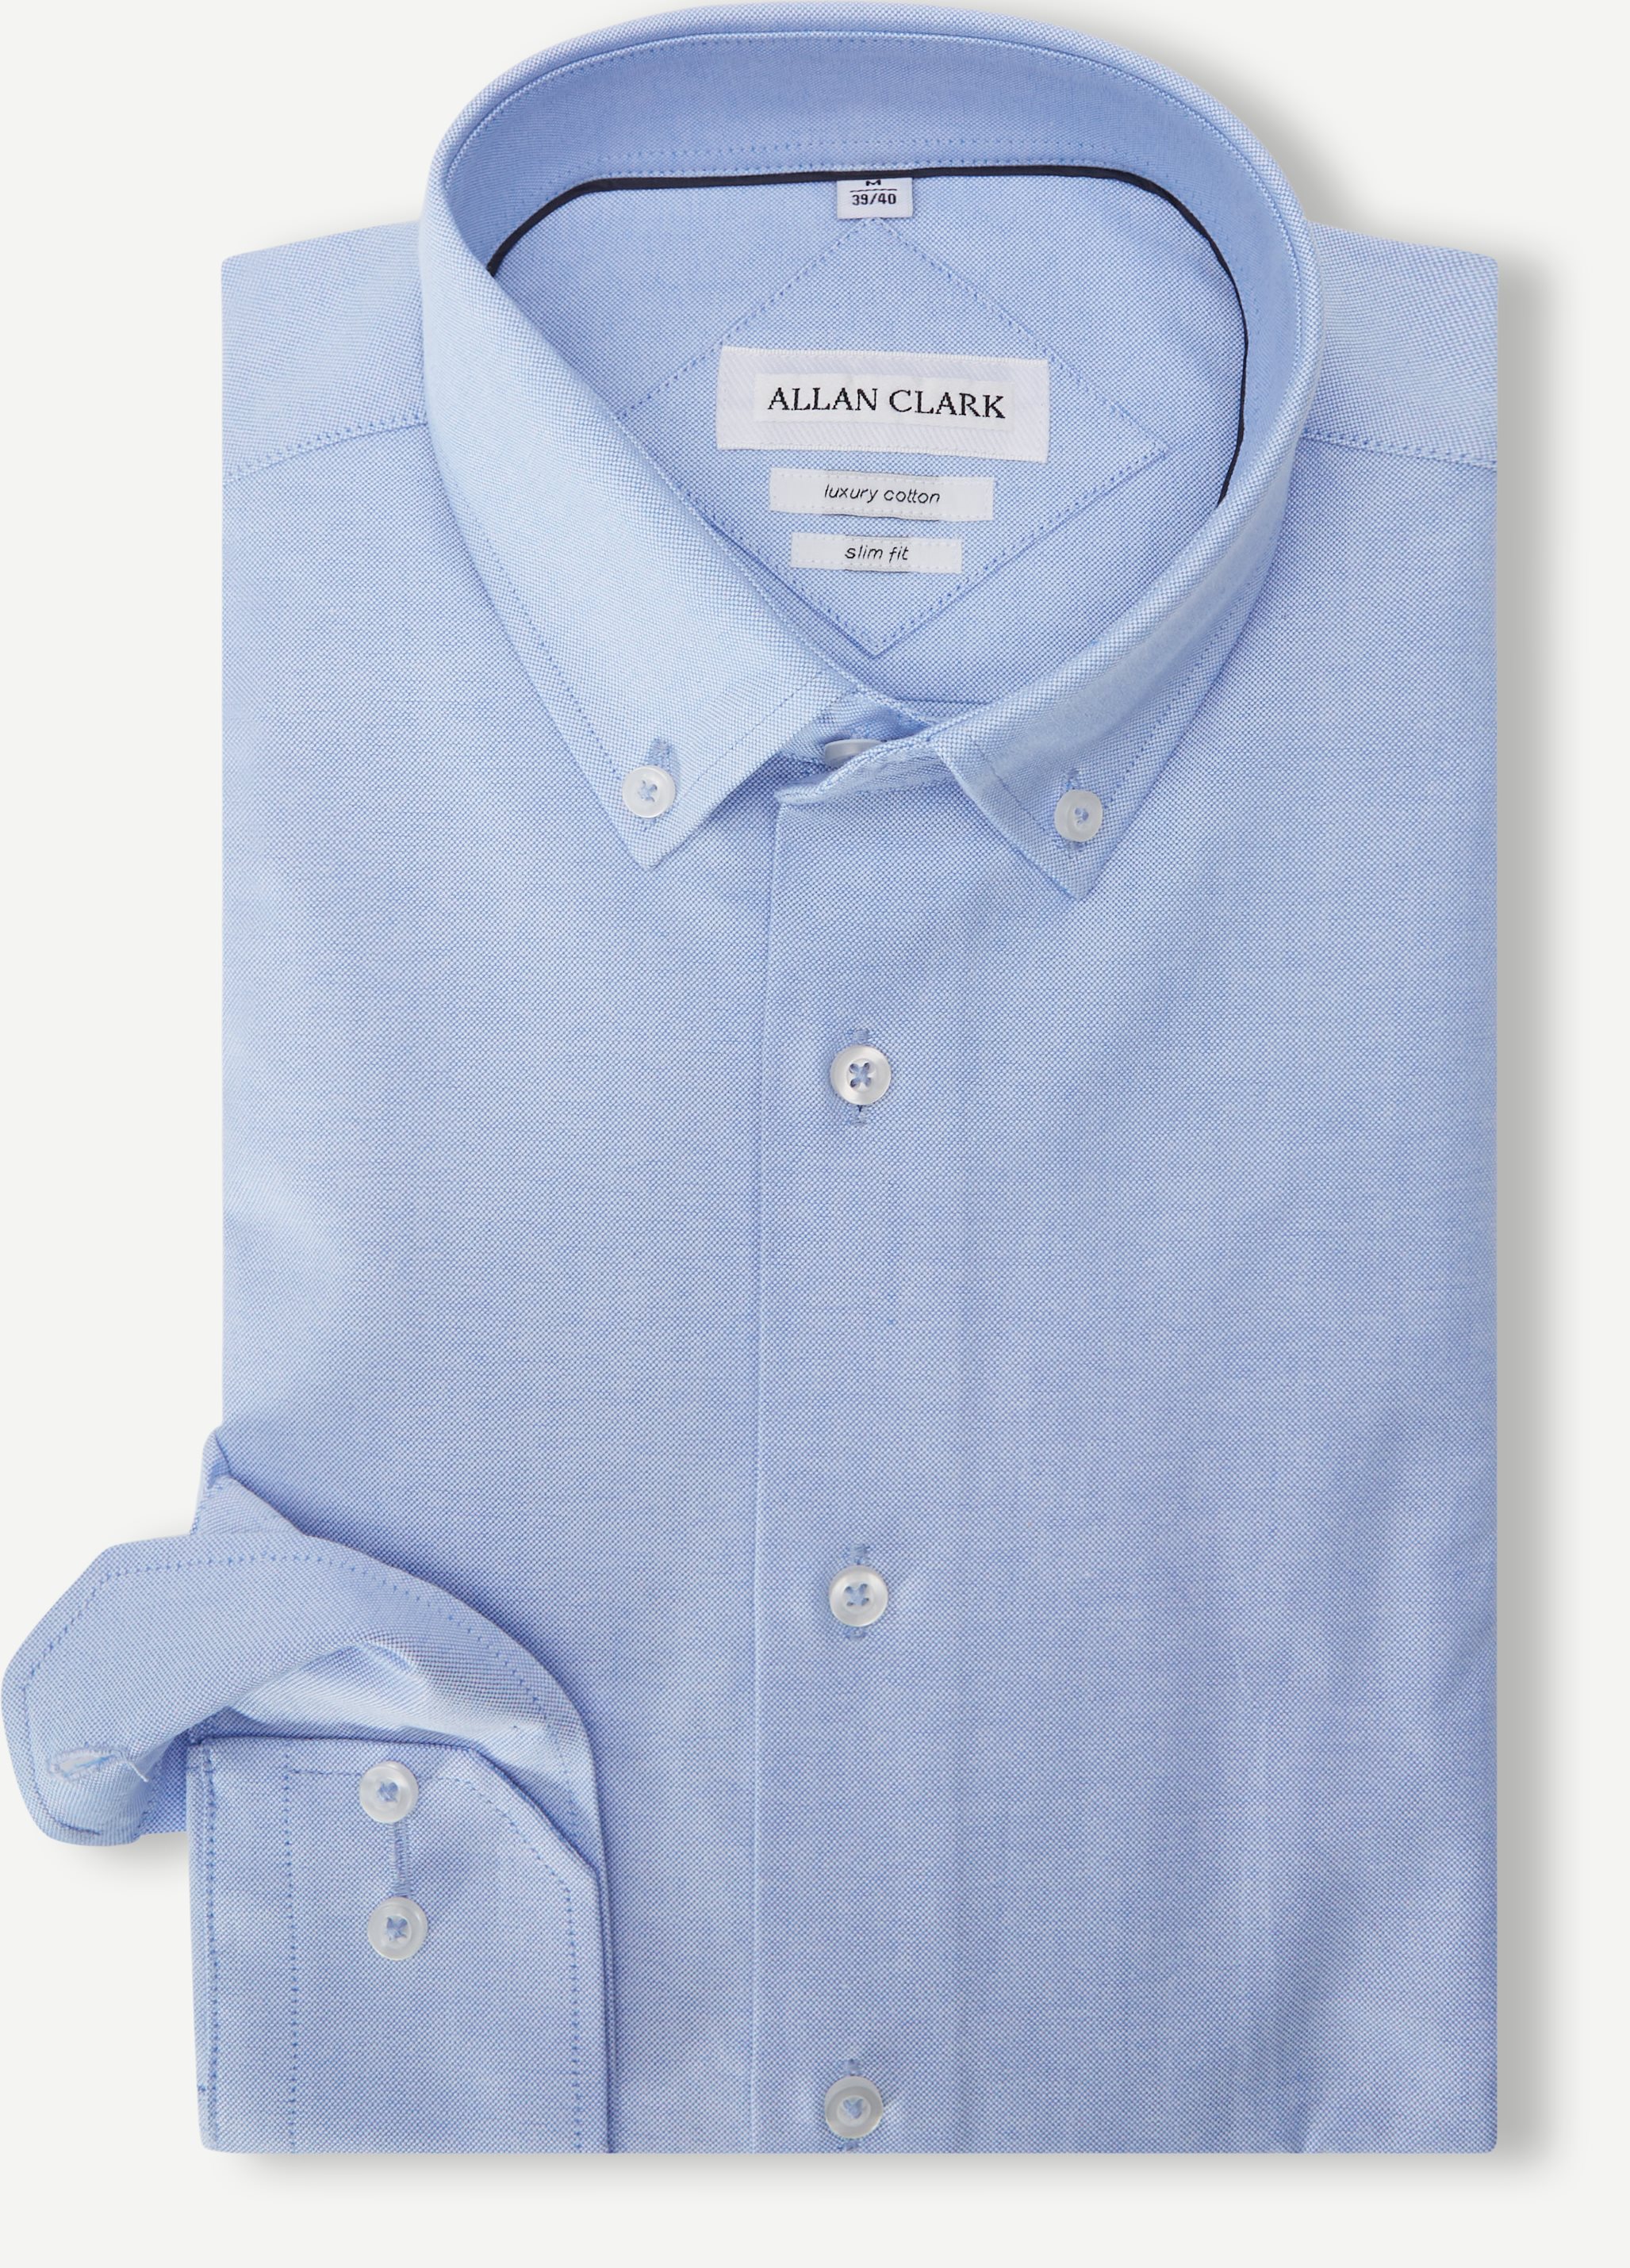 Allan Clark Shirts NEW HAVEN Blue